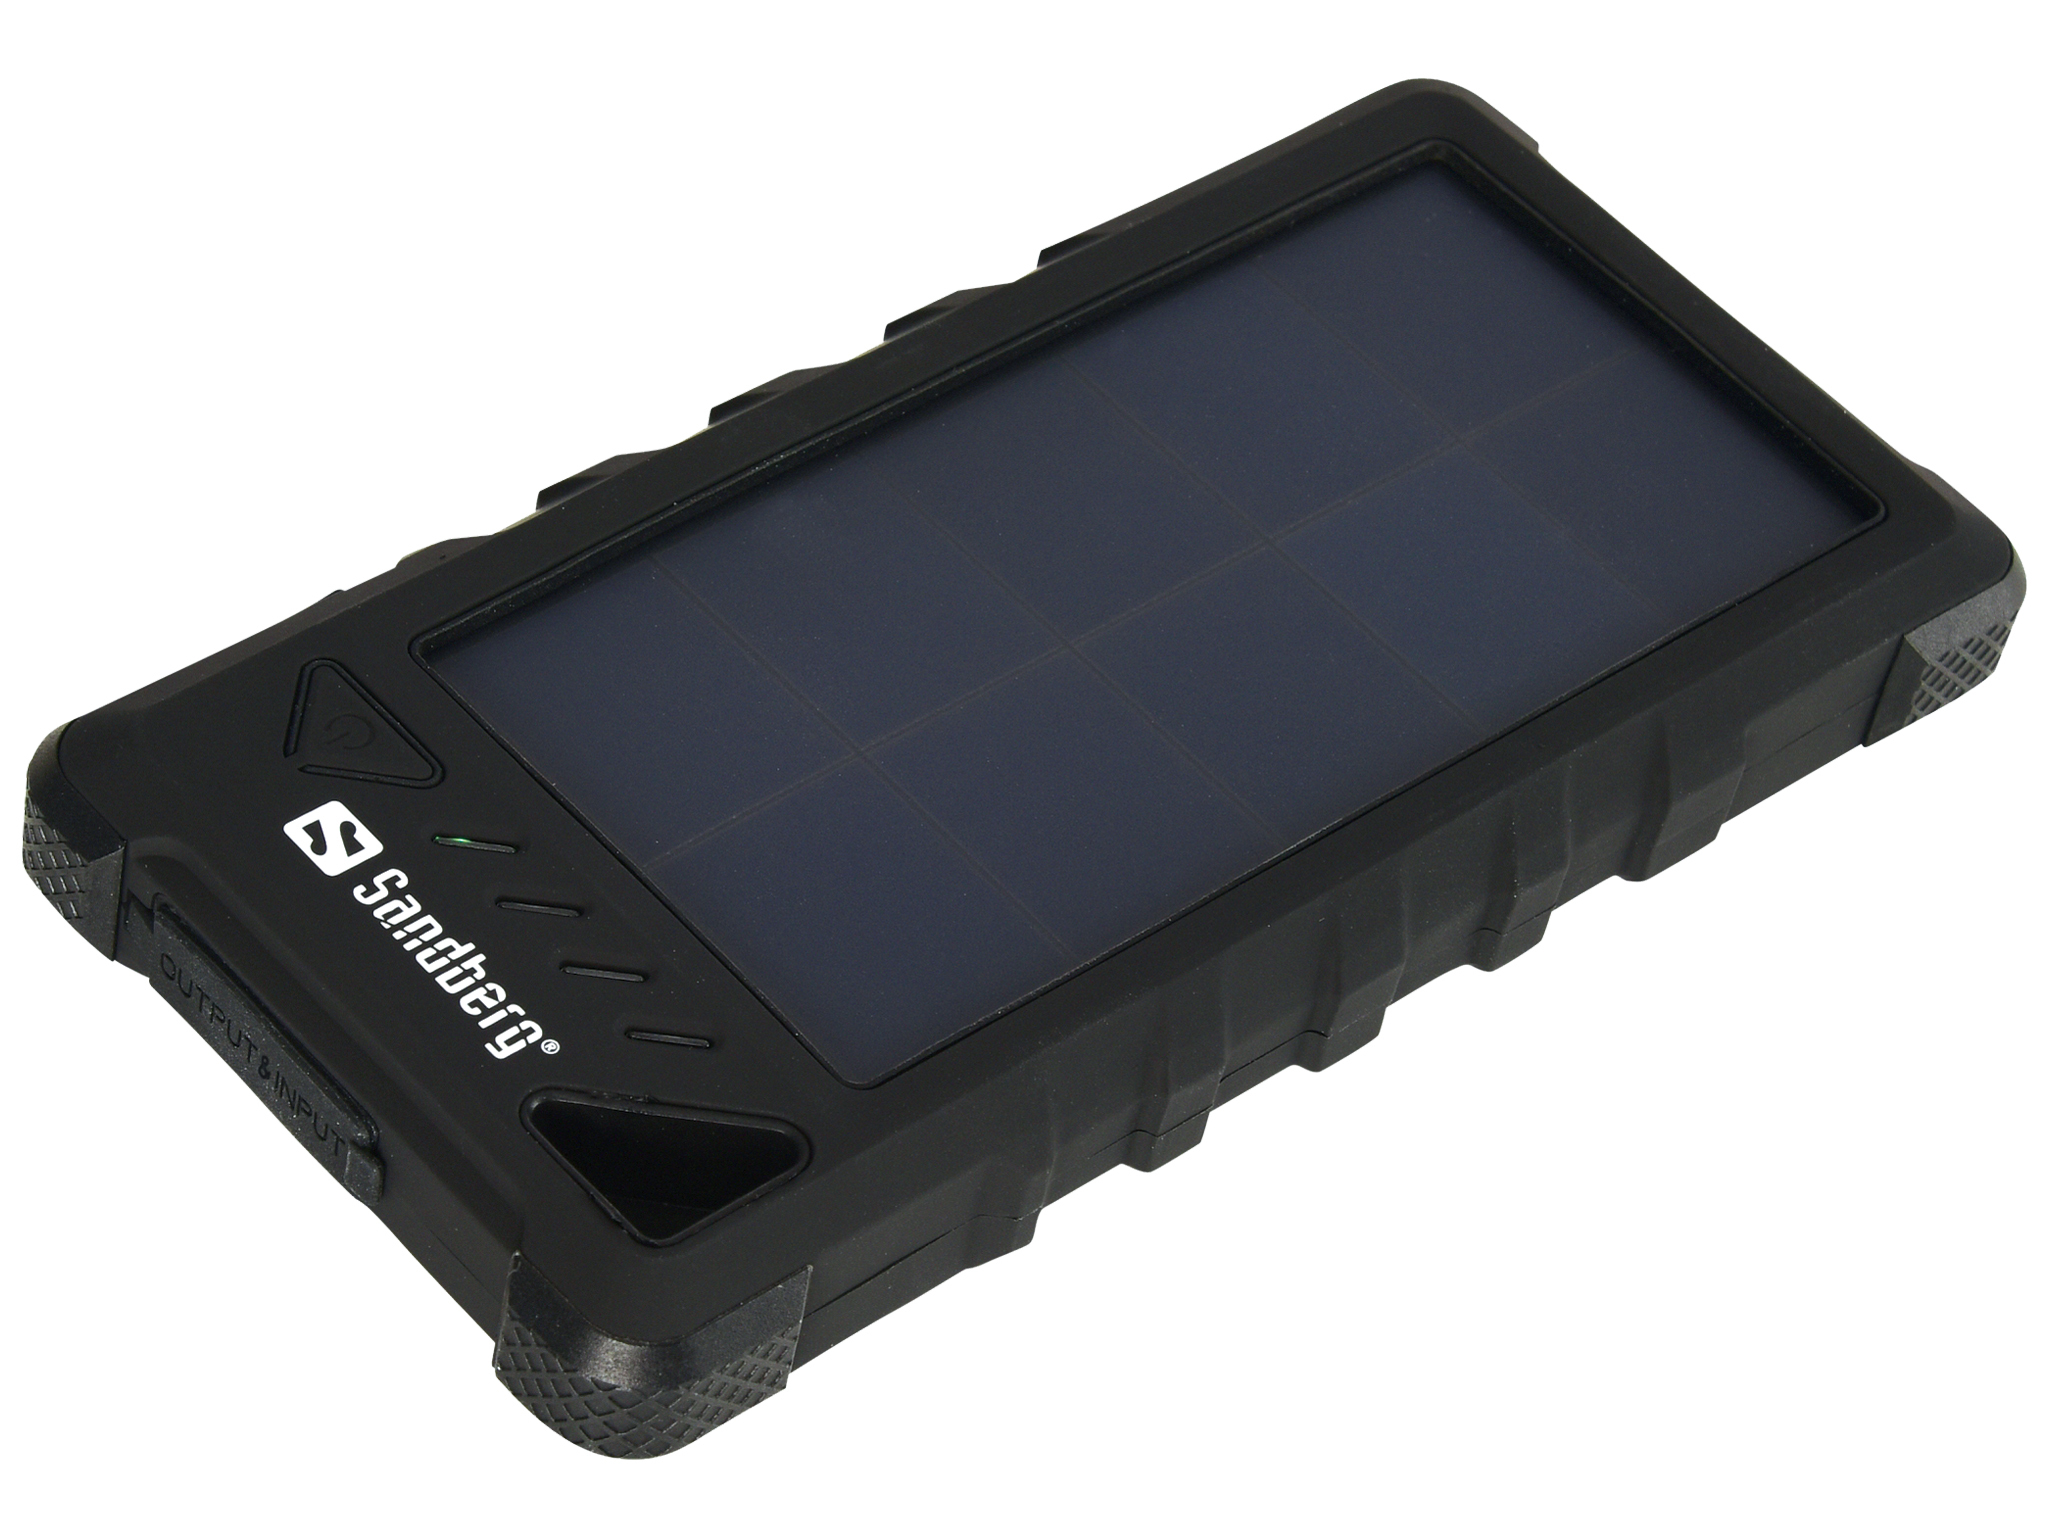 SANDBERG Outdoor Solar Powerbank 16000 - Solar-Powerbank - Li-Ion - 16000 mAh - 3.4 A - 2 Ausgabeanschlussstellen (USB)